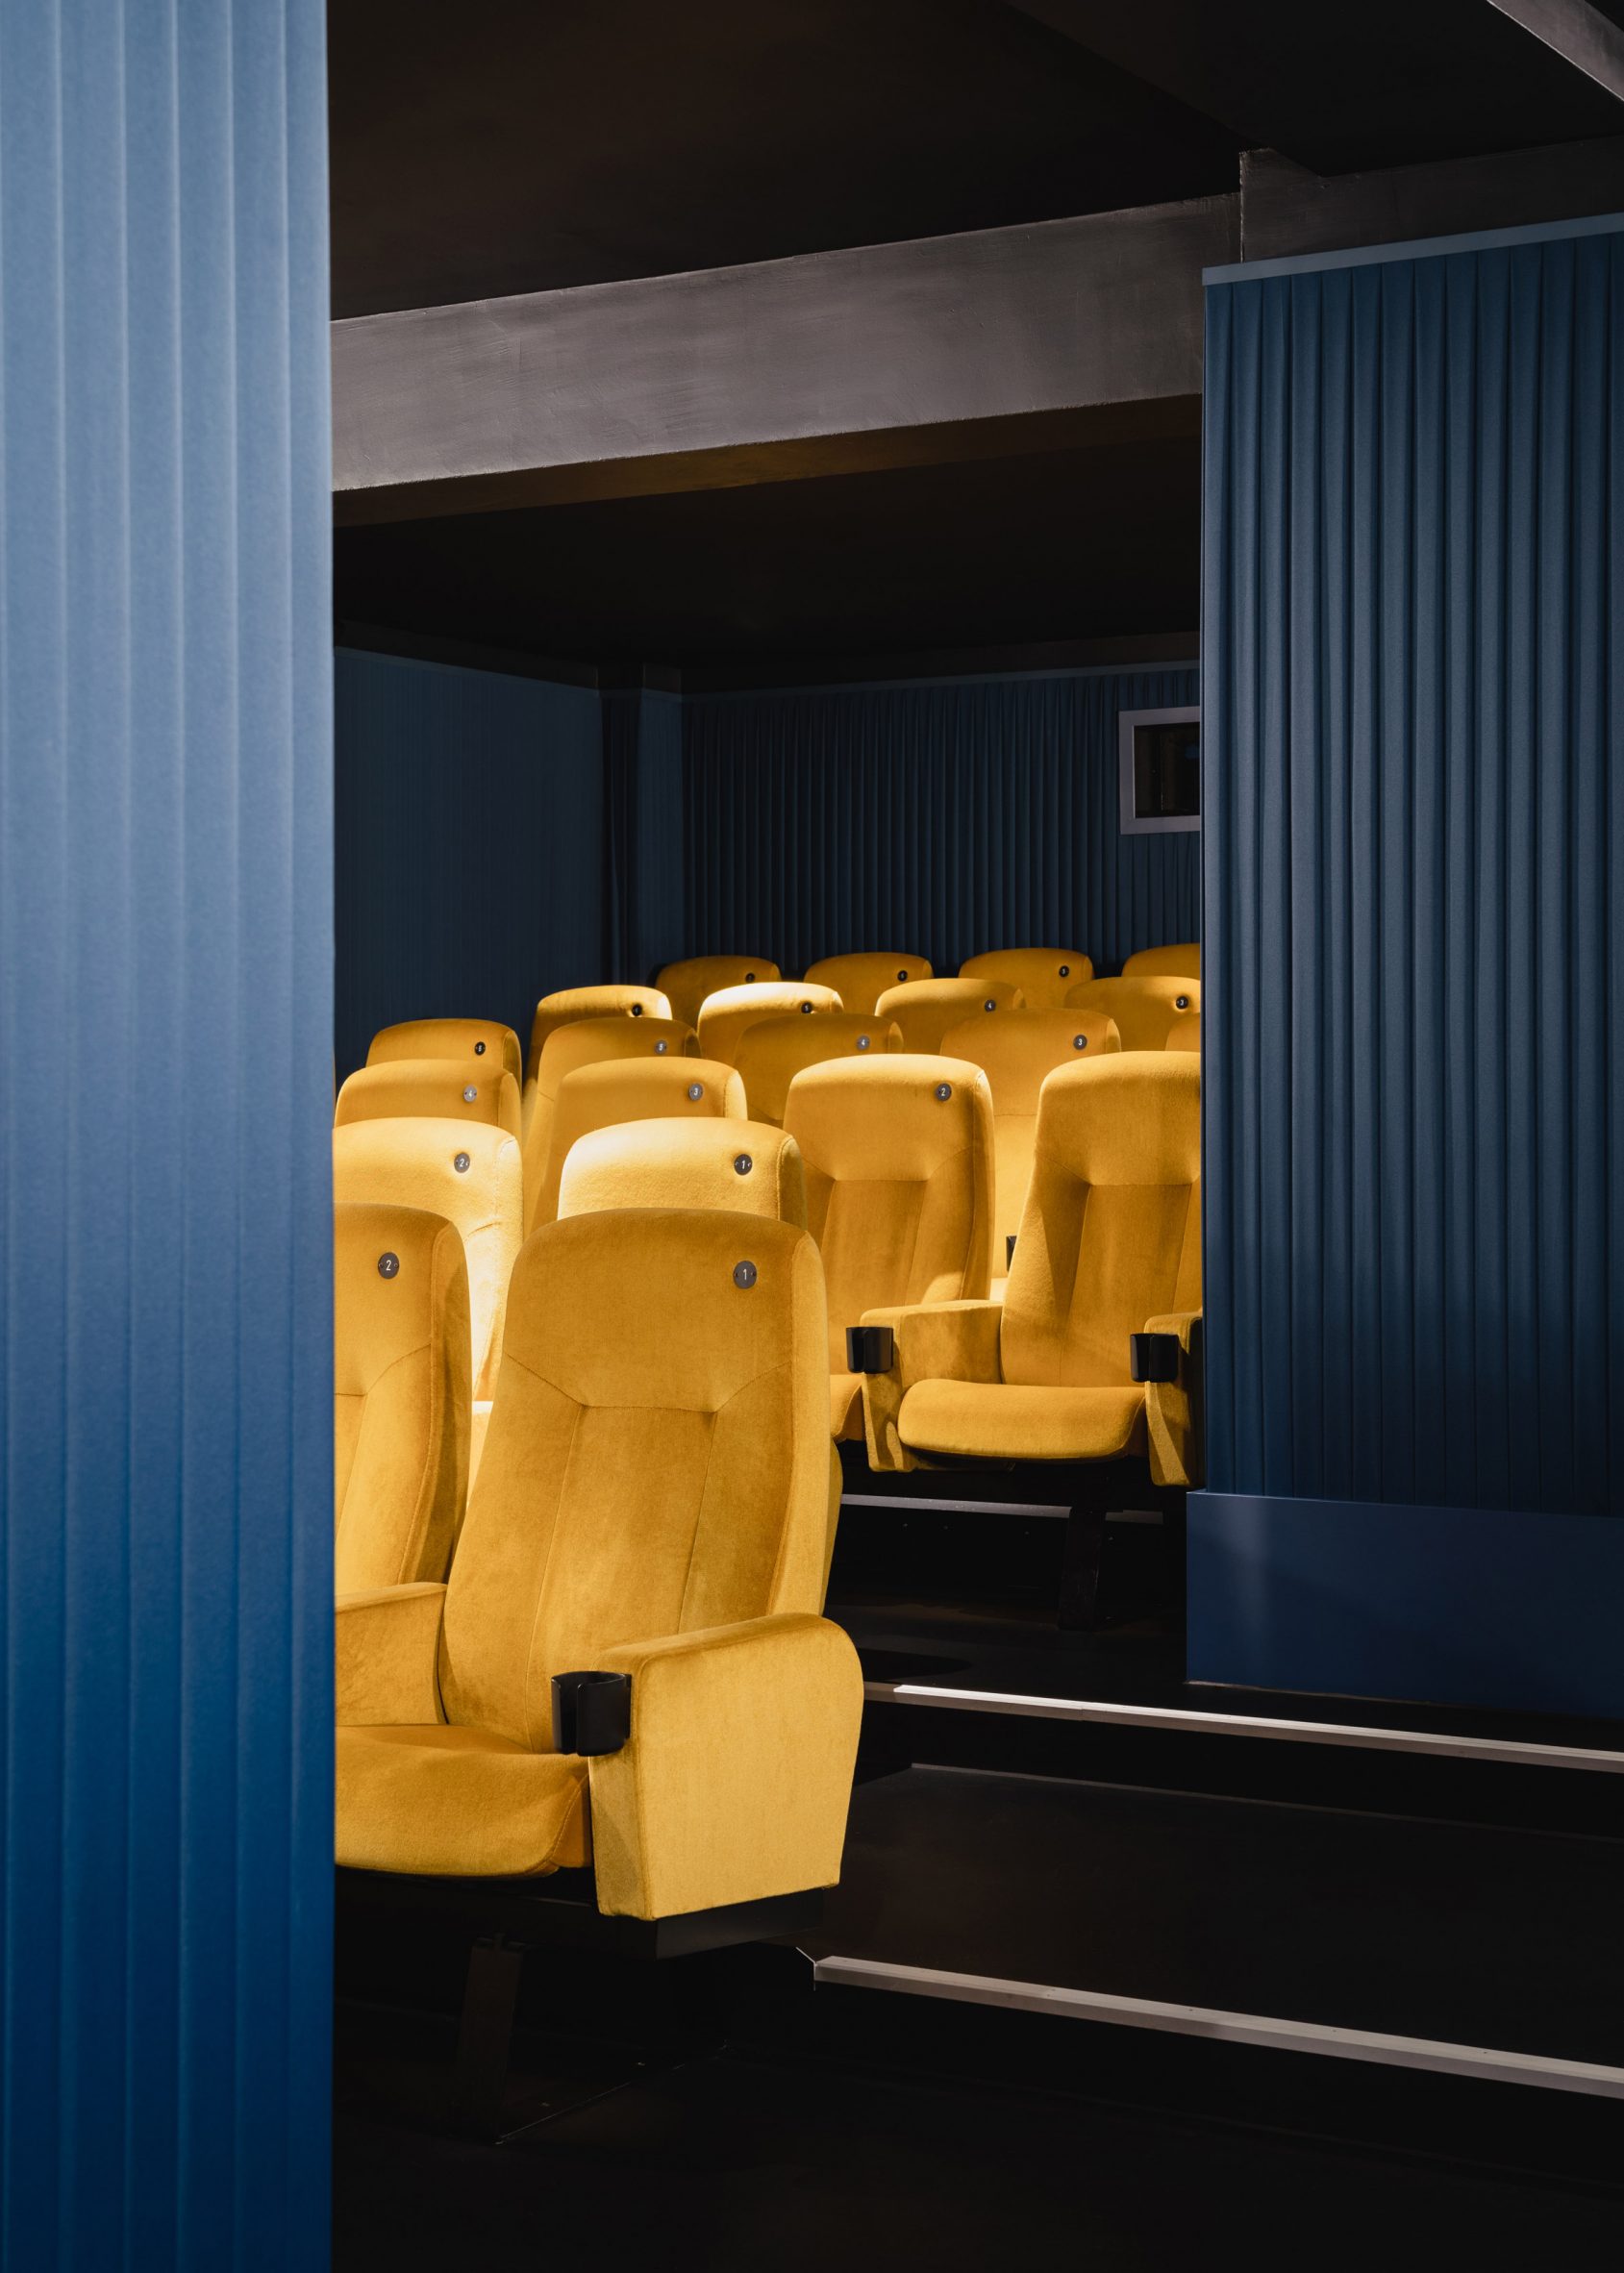 Blue and yellow cinema auditorium